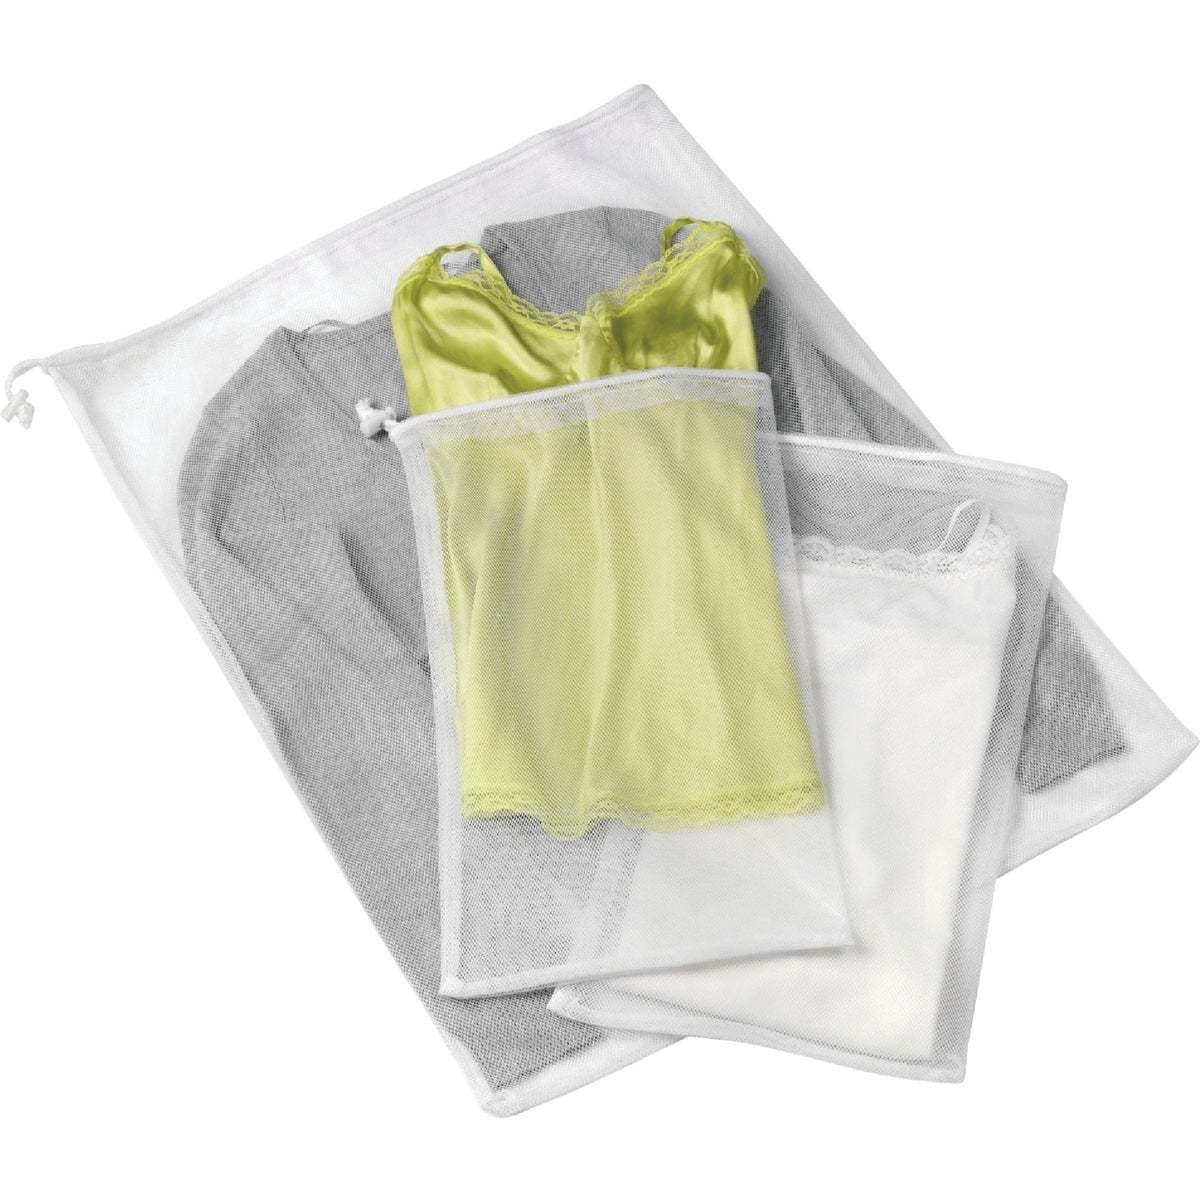 Whitmor Mesh Laundry Bags (3-Pack) - 1 Each - Bed Bath & Beyond